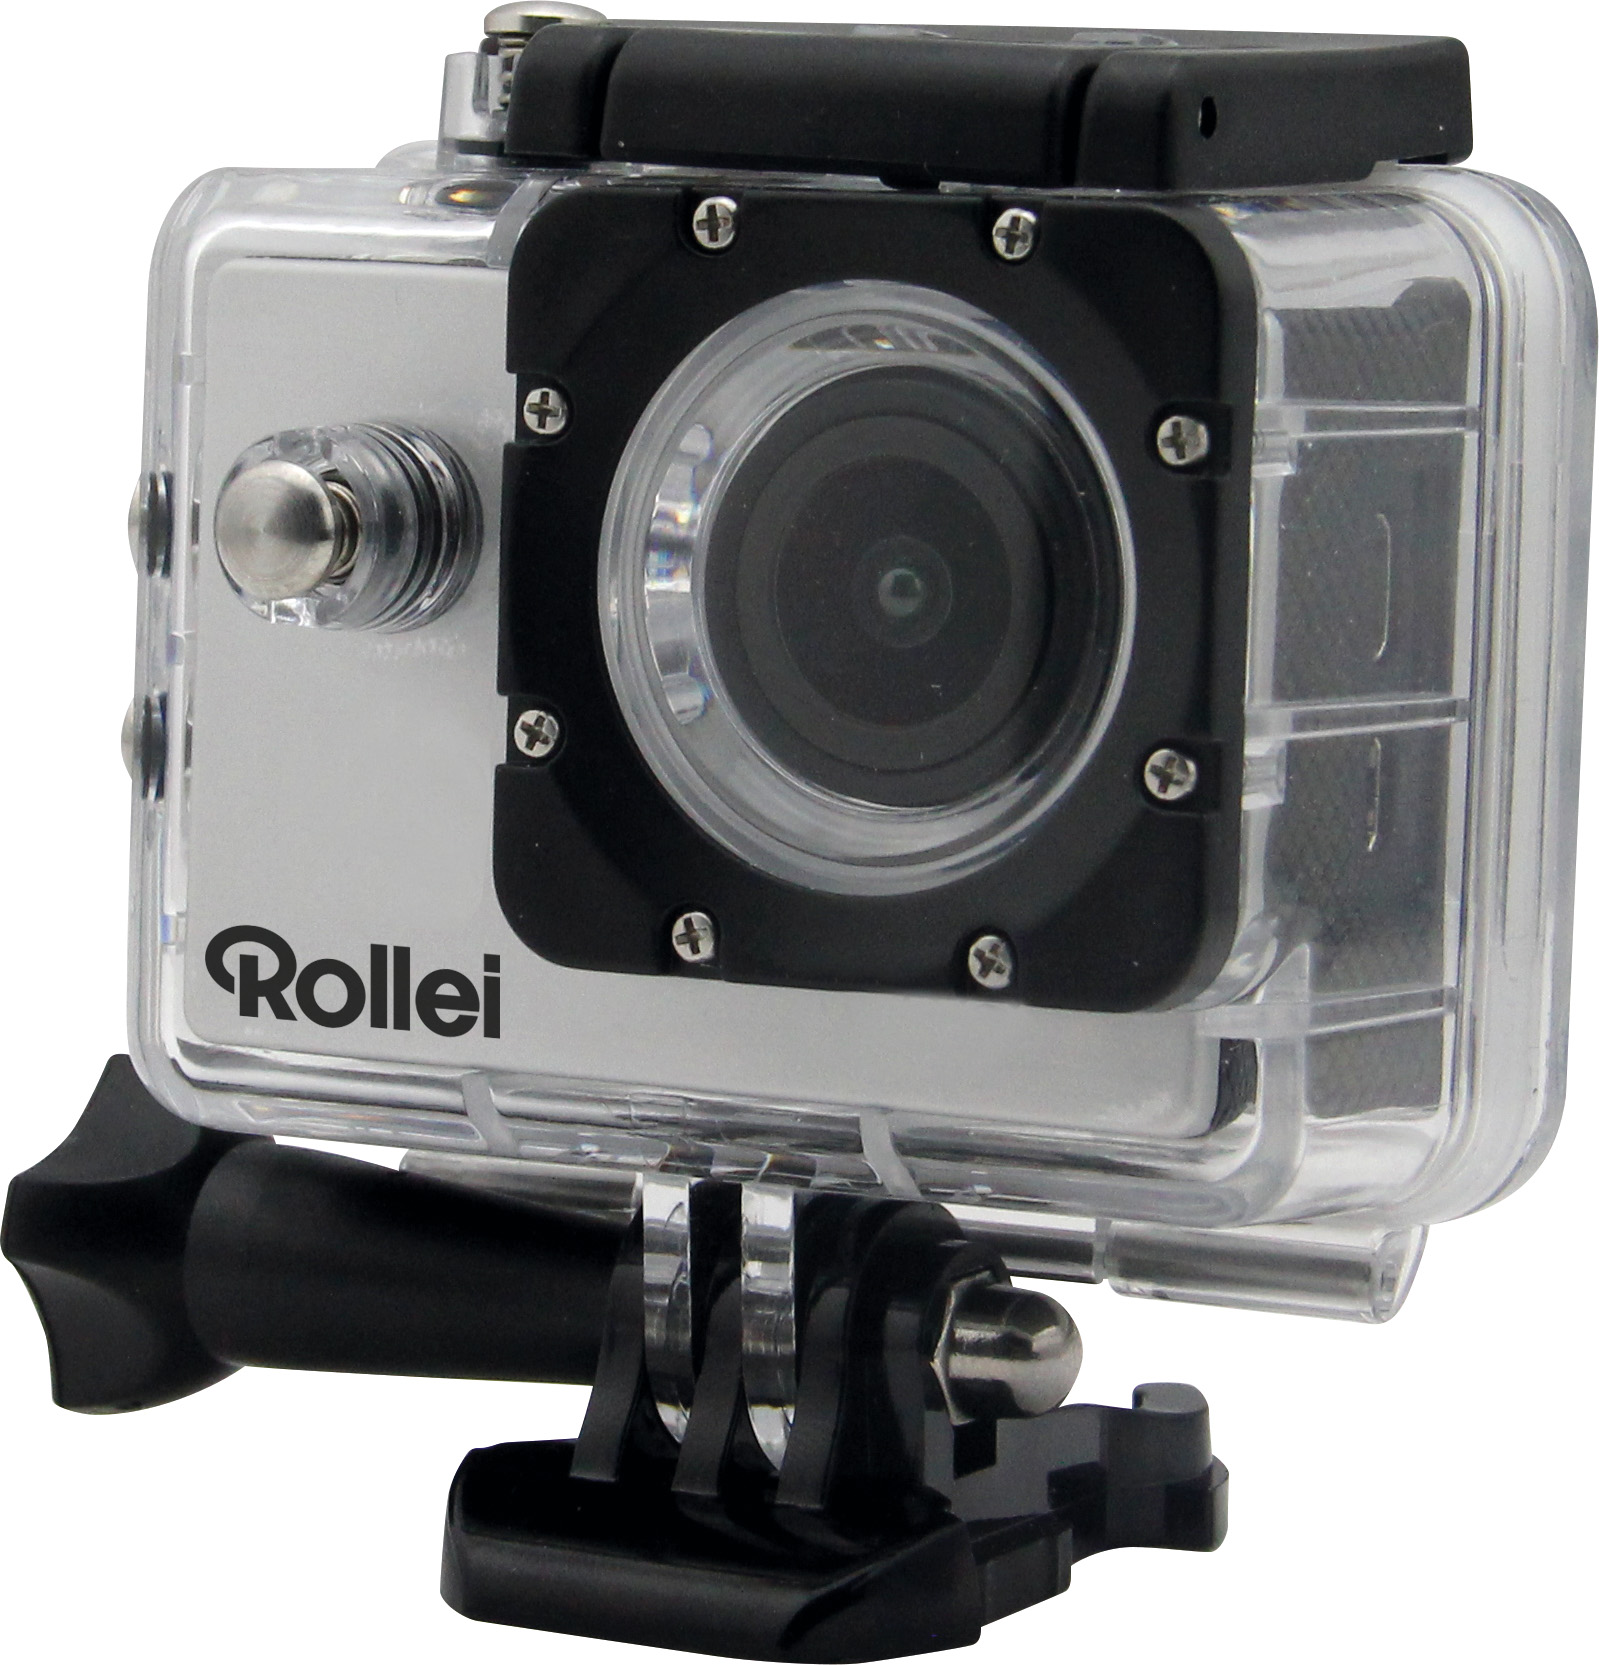 Digitální kamera Rollei ActionCam 310